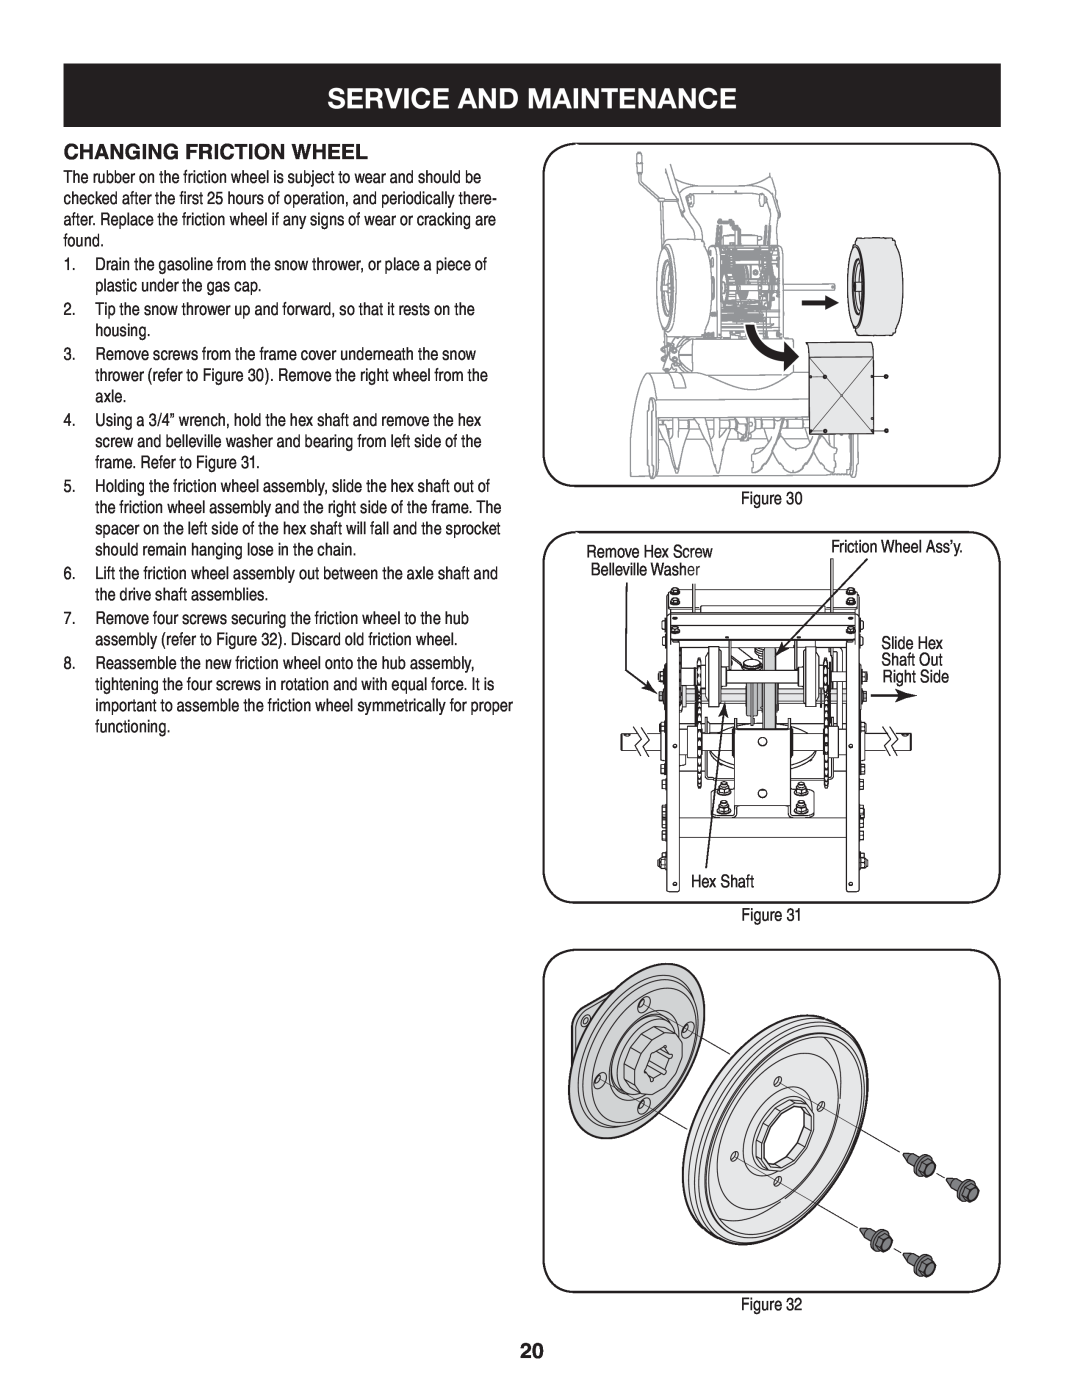 Craftsman 247.88045 manual Service And Maintenance, Changing Friction Wheel 